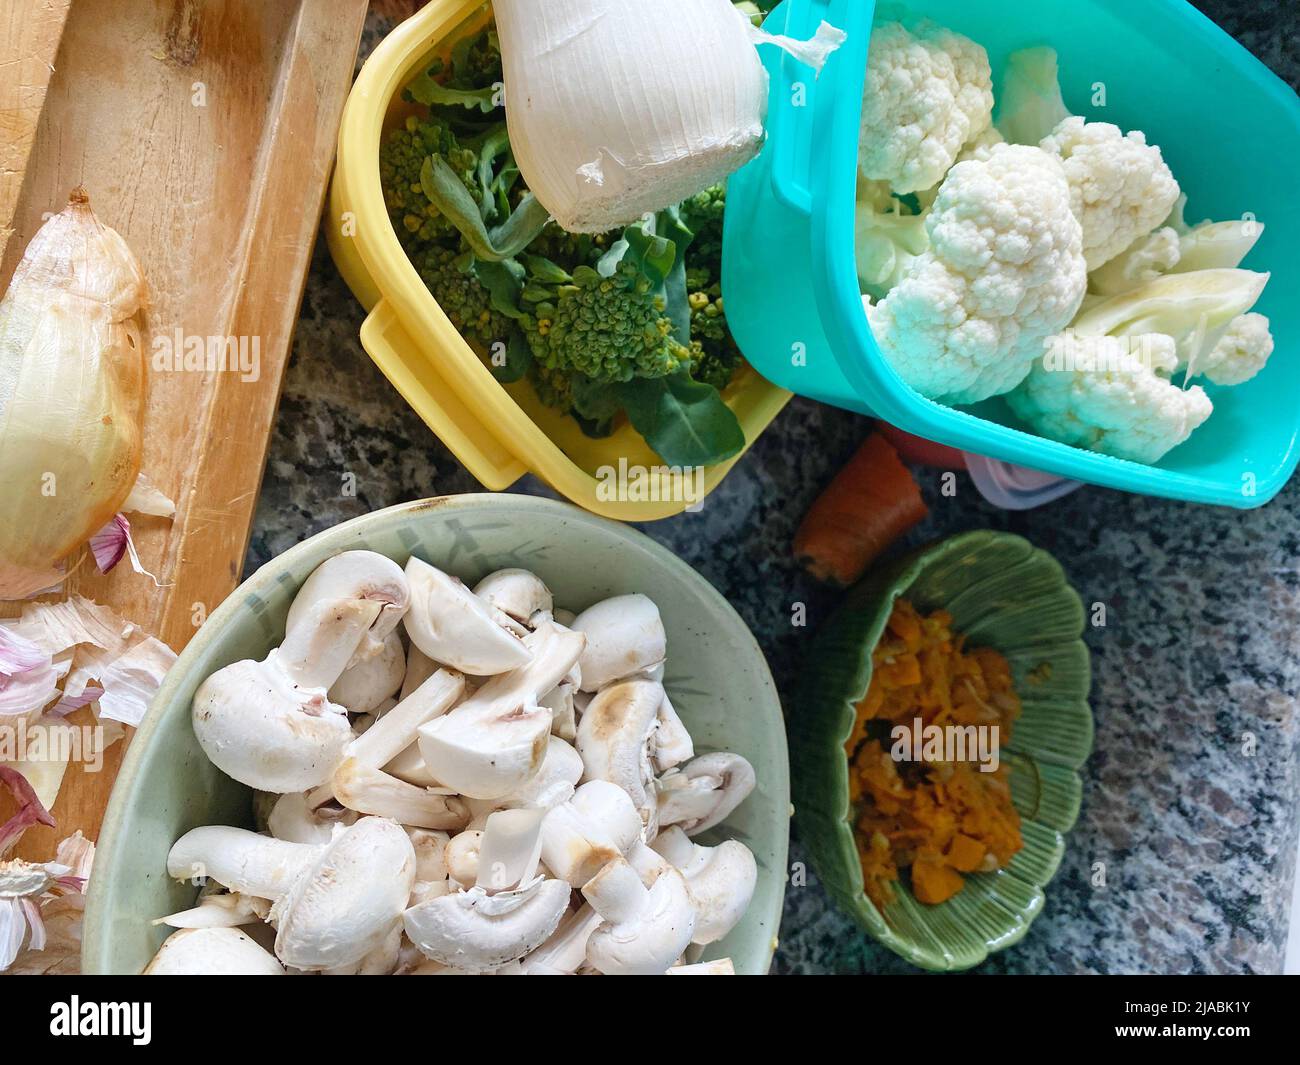 Preparation of mushrooms and vegetables. Vegetarian menu. Healthy food options. Stock Photo